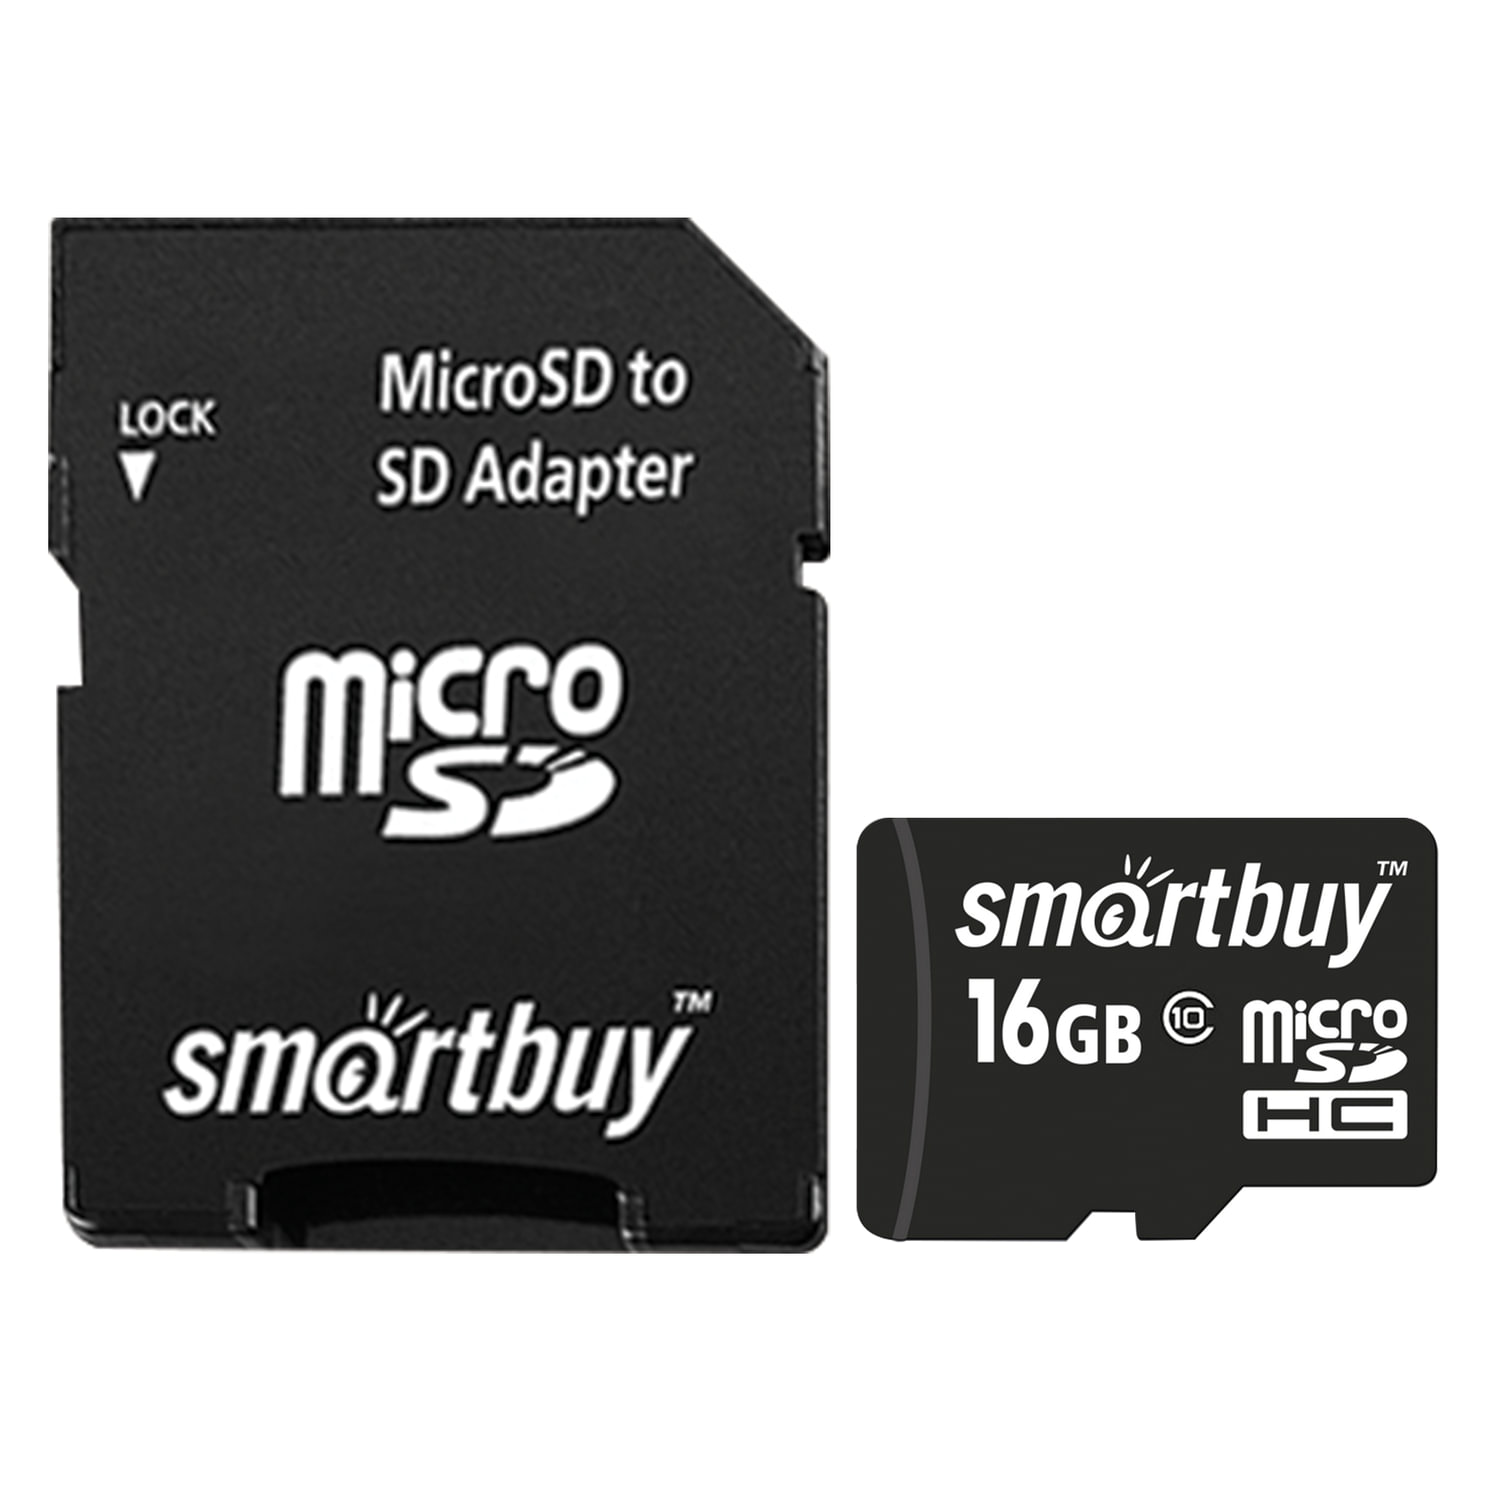 Купить микро сд 64. SMARTBUY 32gb MICROSD. Карта памяти SMARTBUY MICROSDHC class 10 8gb + SD Adapter. Карта памяти SMARTBUY MICROSDHC 16gb. Карта памяти Micro SDHC, 32 GB, SMARTBUY, 10 МБ/сек. (Class 10), с адаптером, sb32gbsdcl10-01.